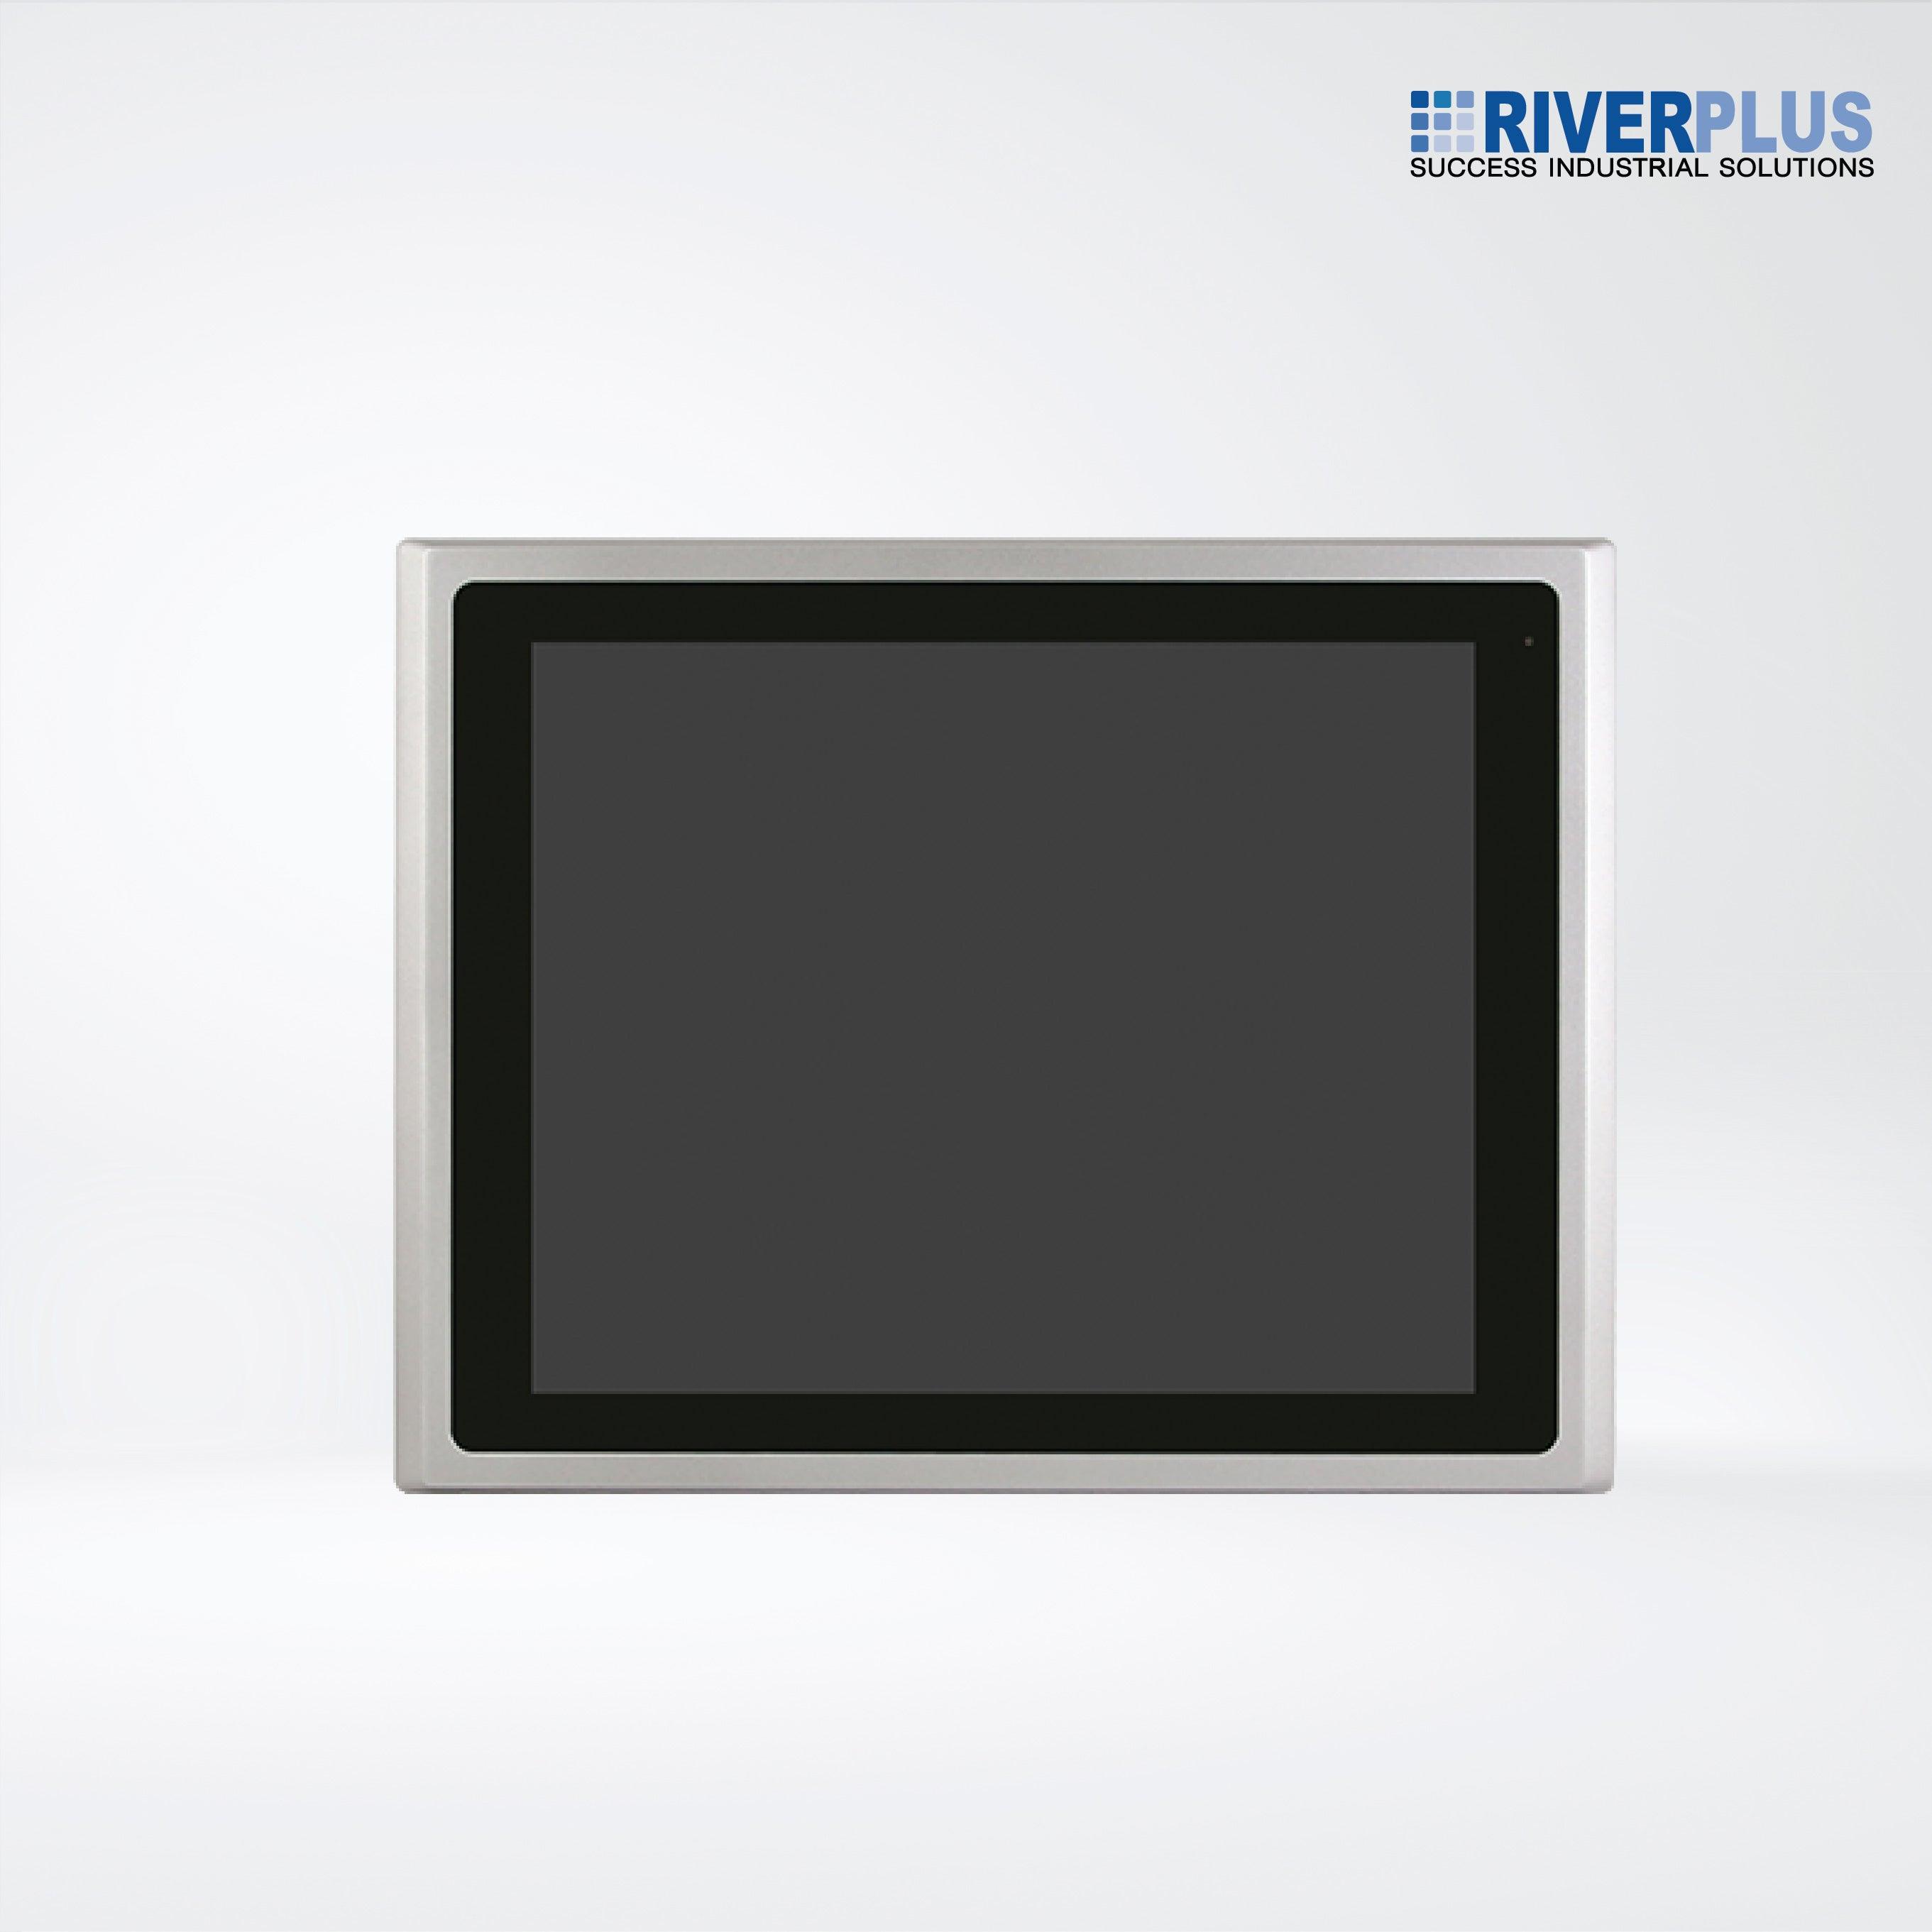 ViPAC-917P 17” Intel 6th/7th Core i3/i5/i7 Panel PC - Riverplus